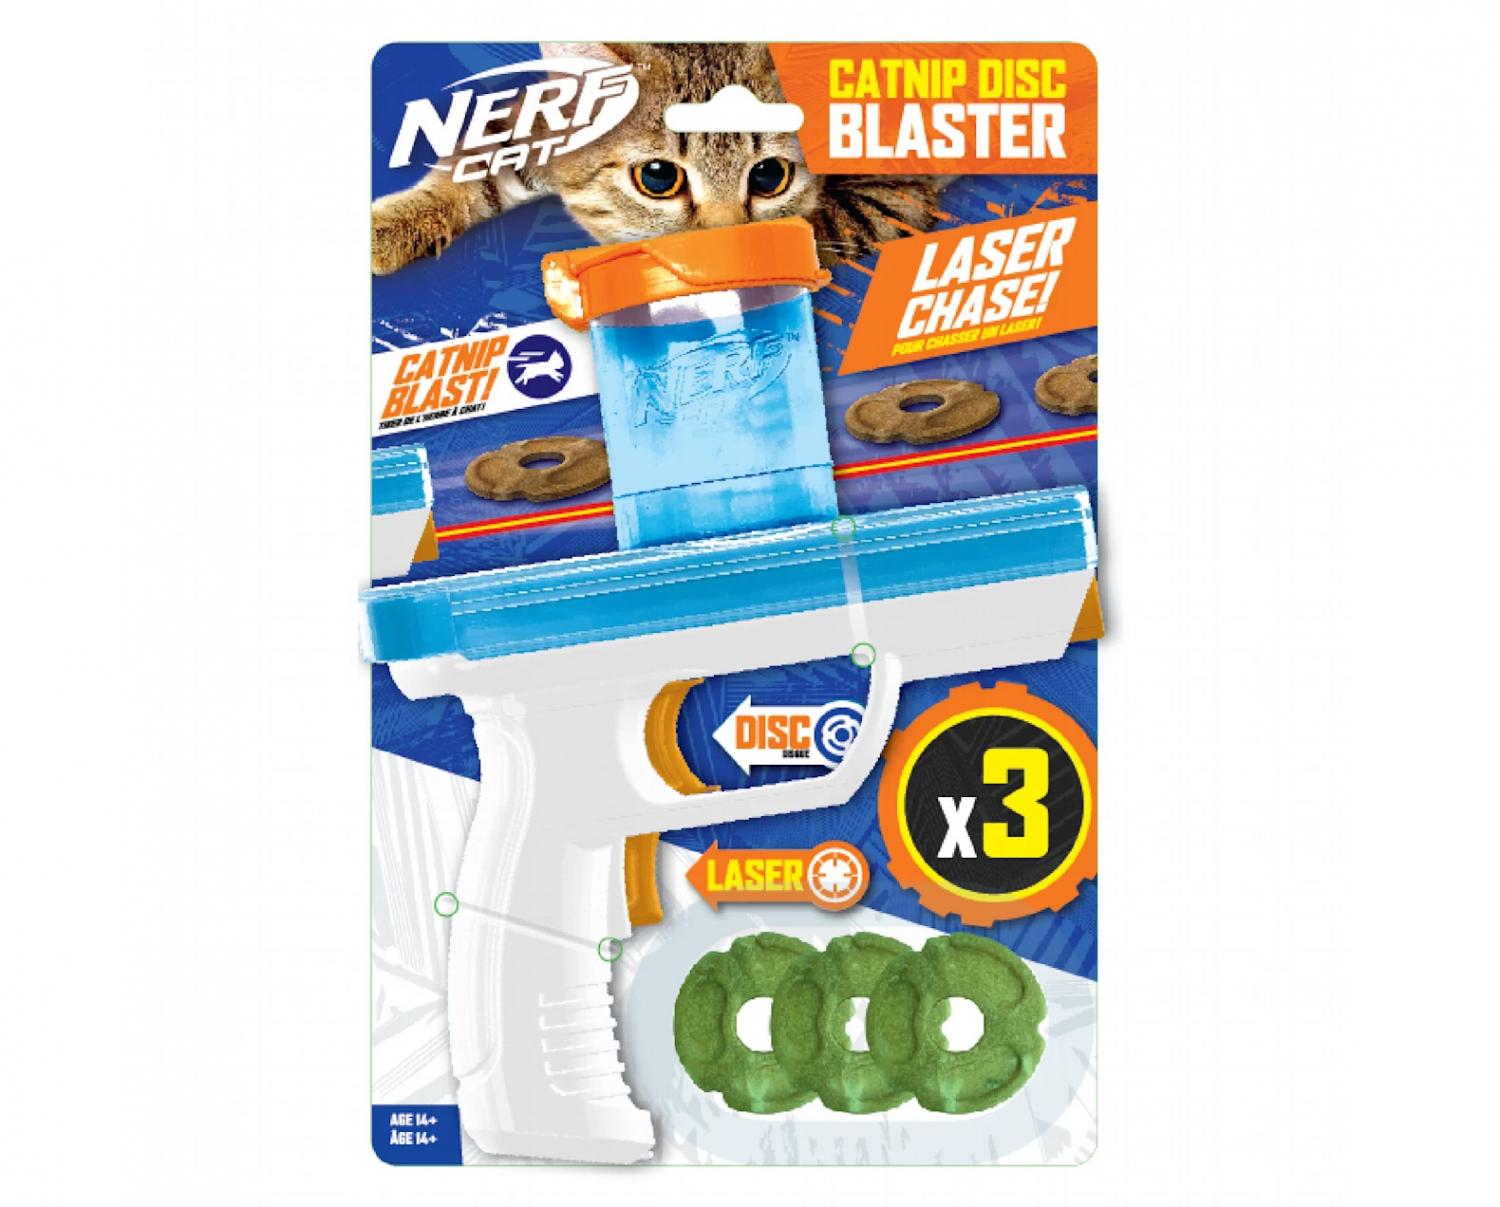 Nerf Catnip Disc Blaster Cat Toy